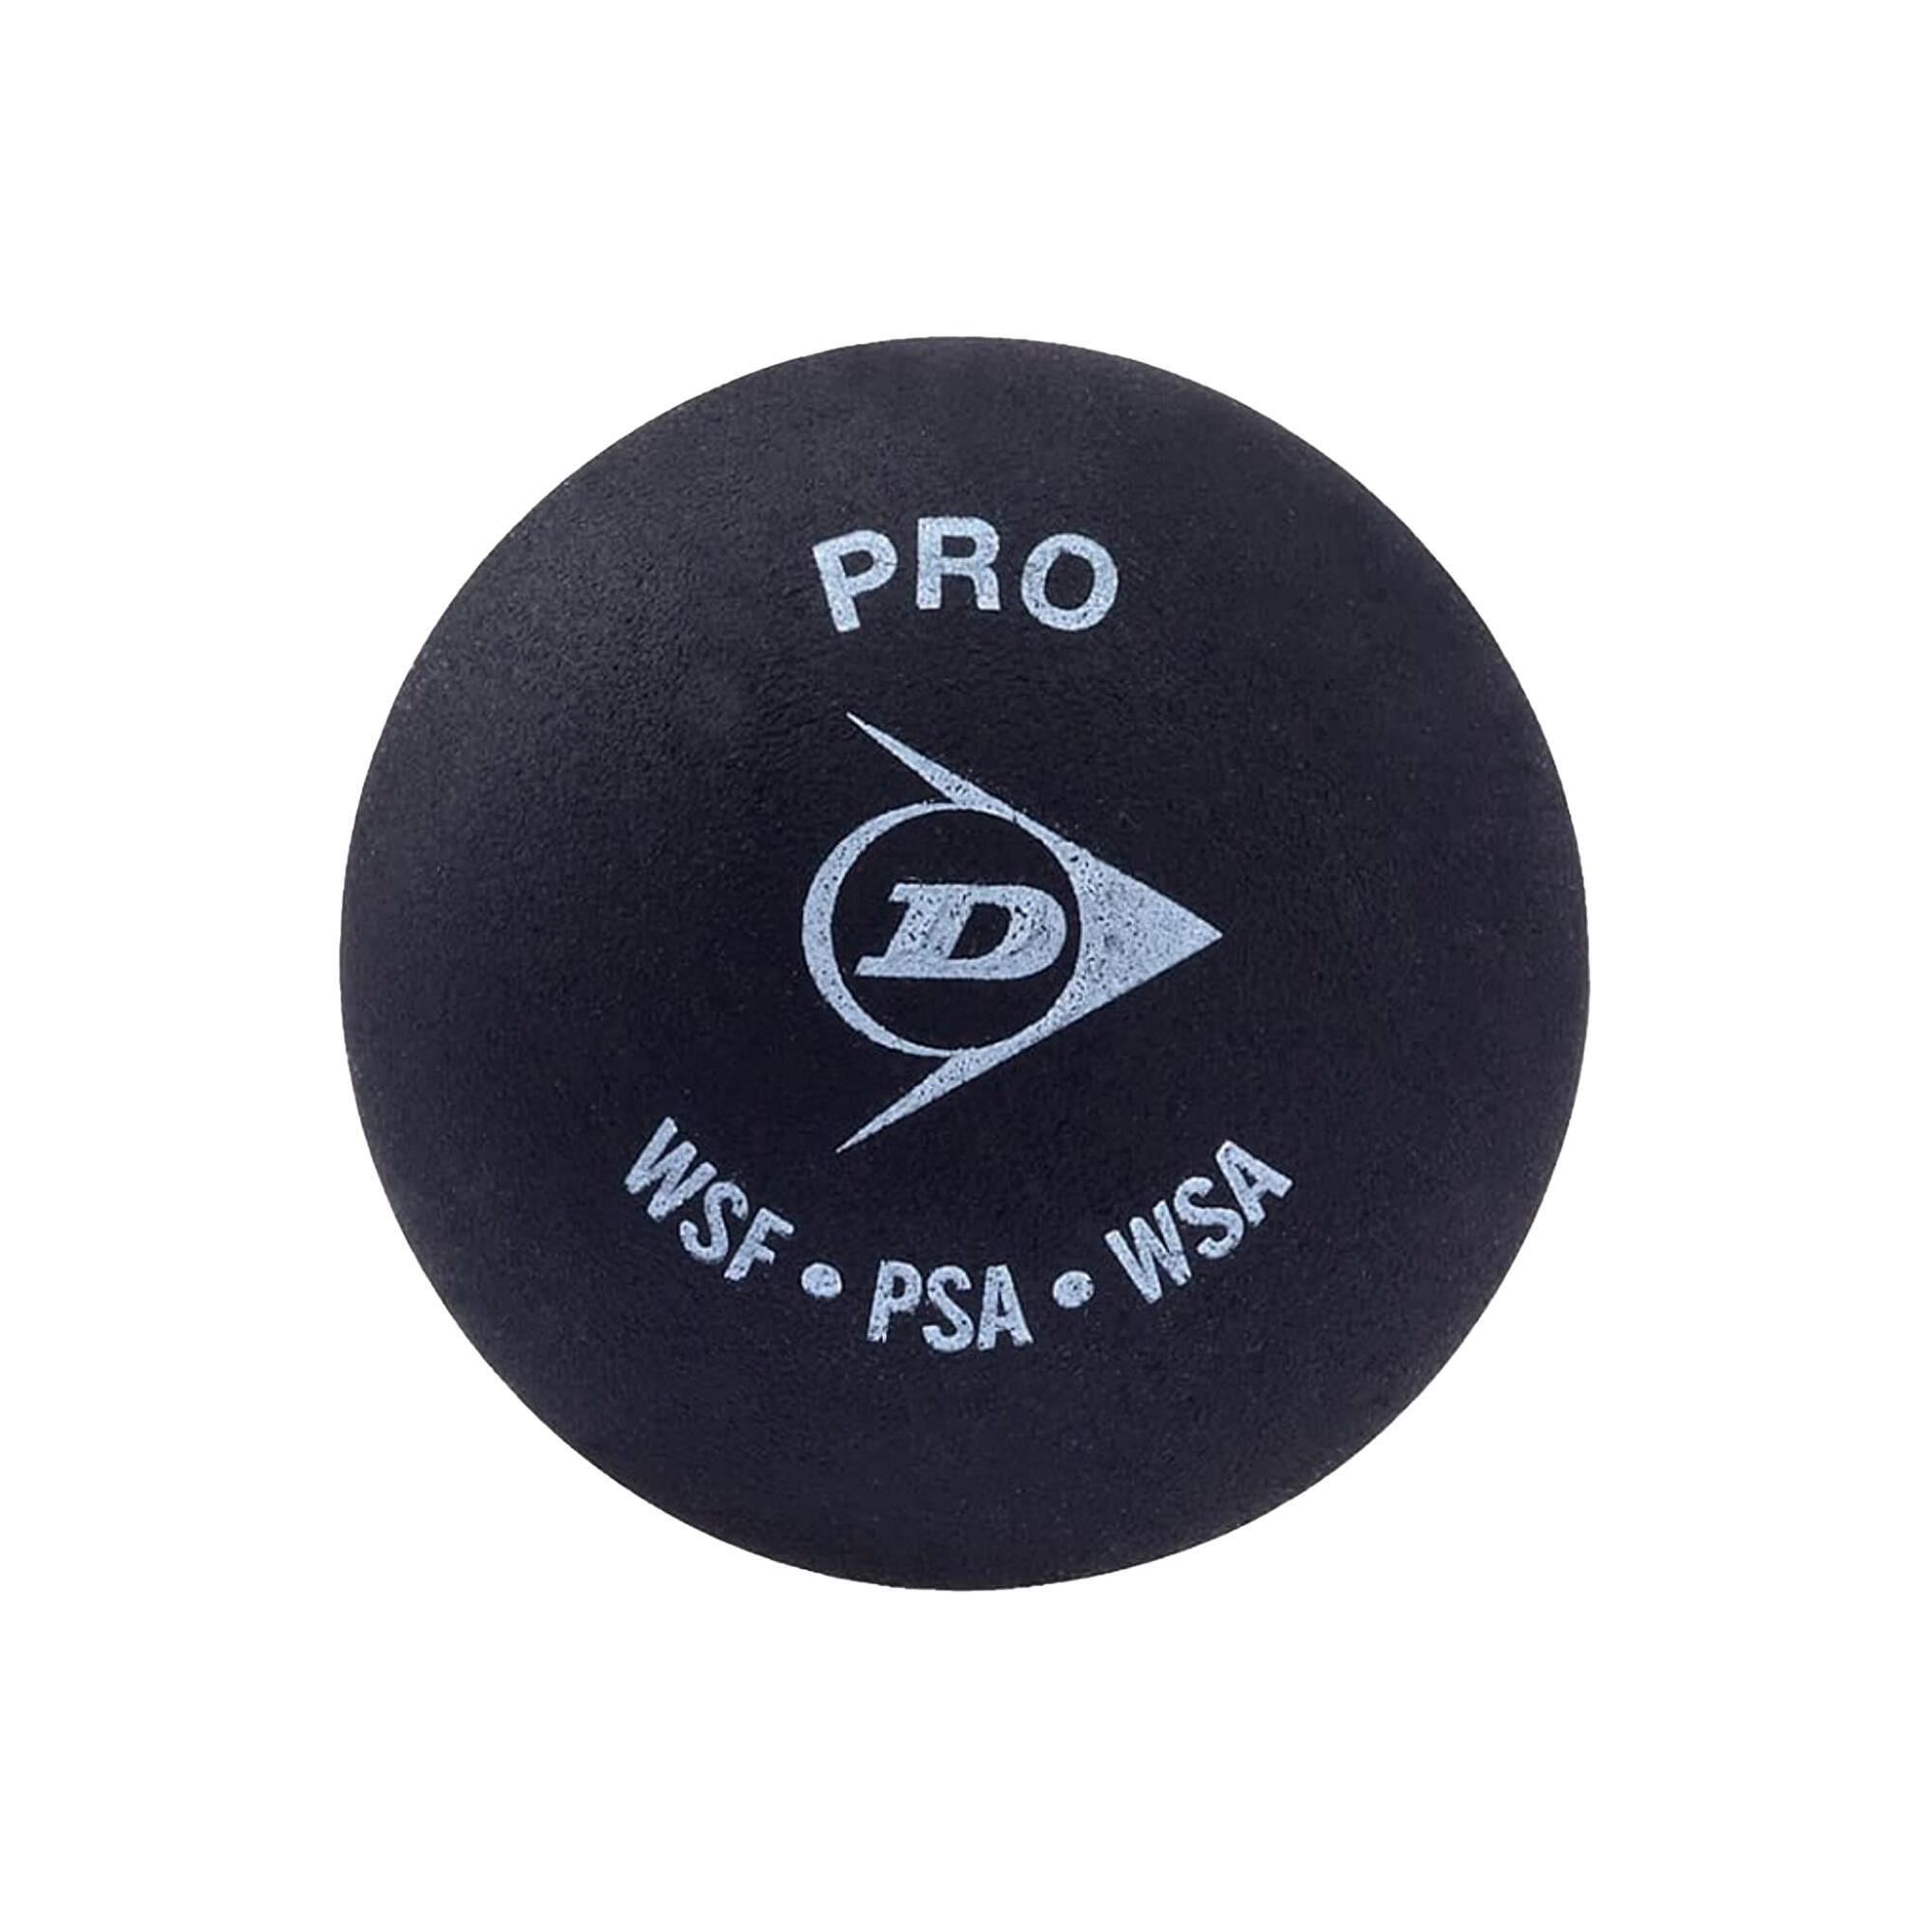 DUNLOP Pro Squash Balls (Pack of 12) (Black/White)